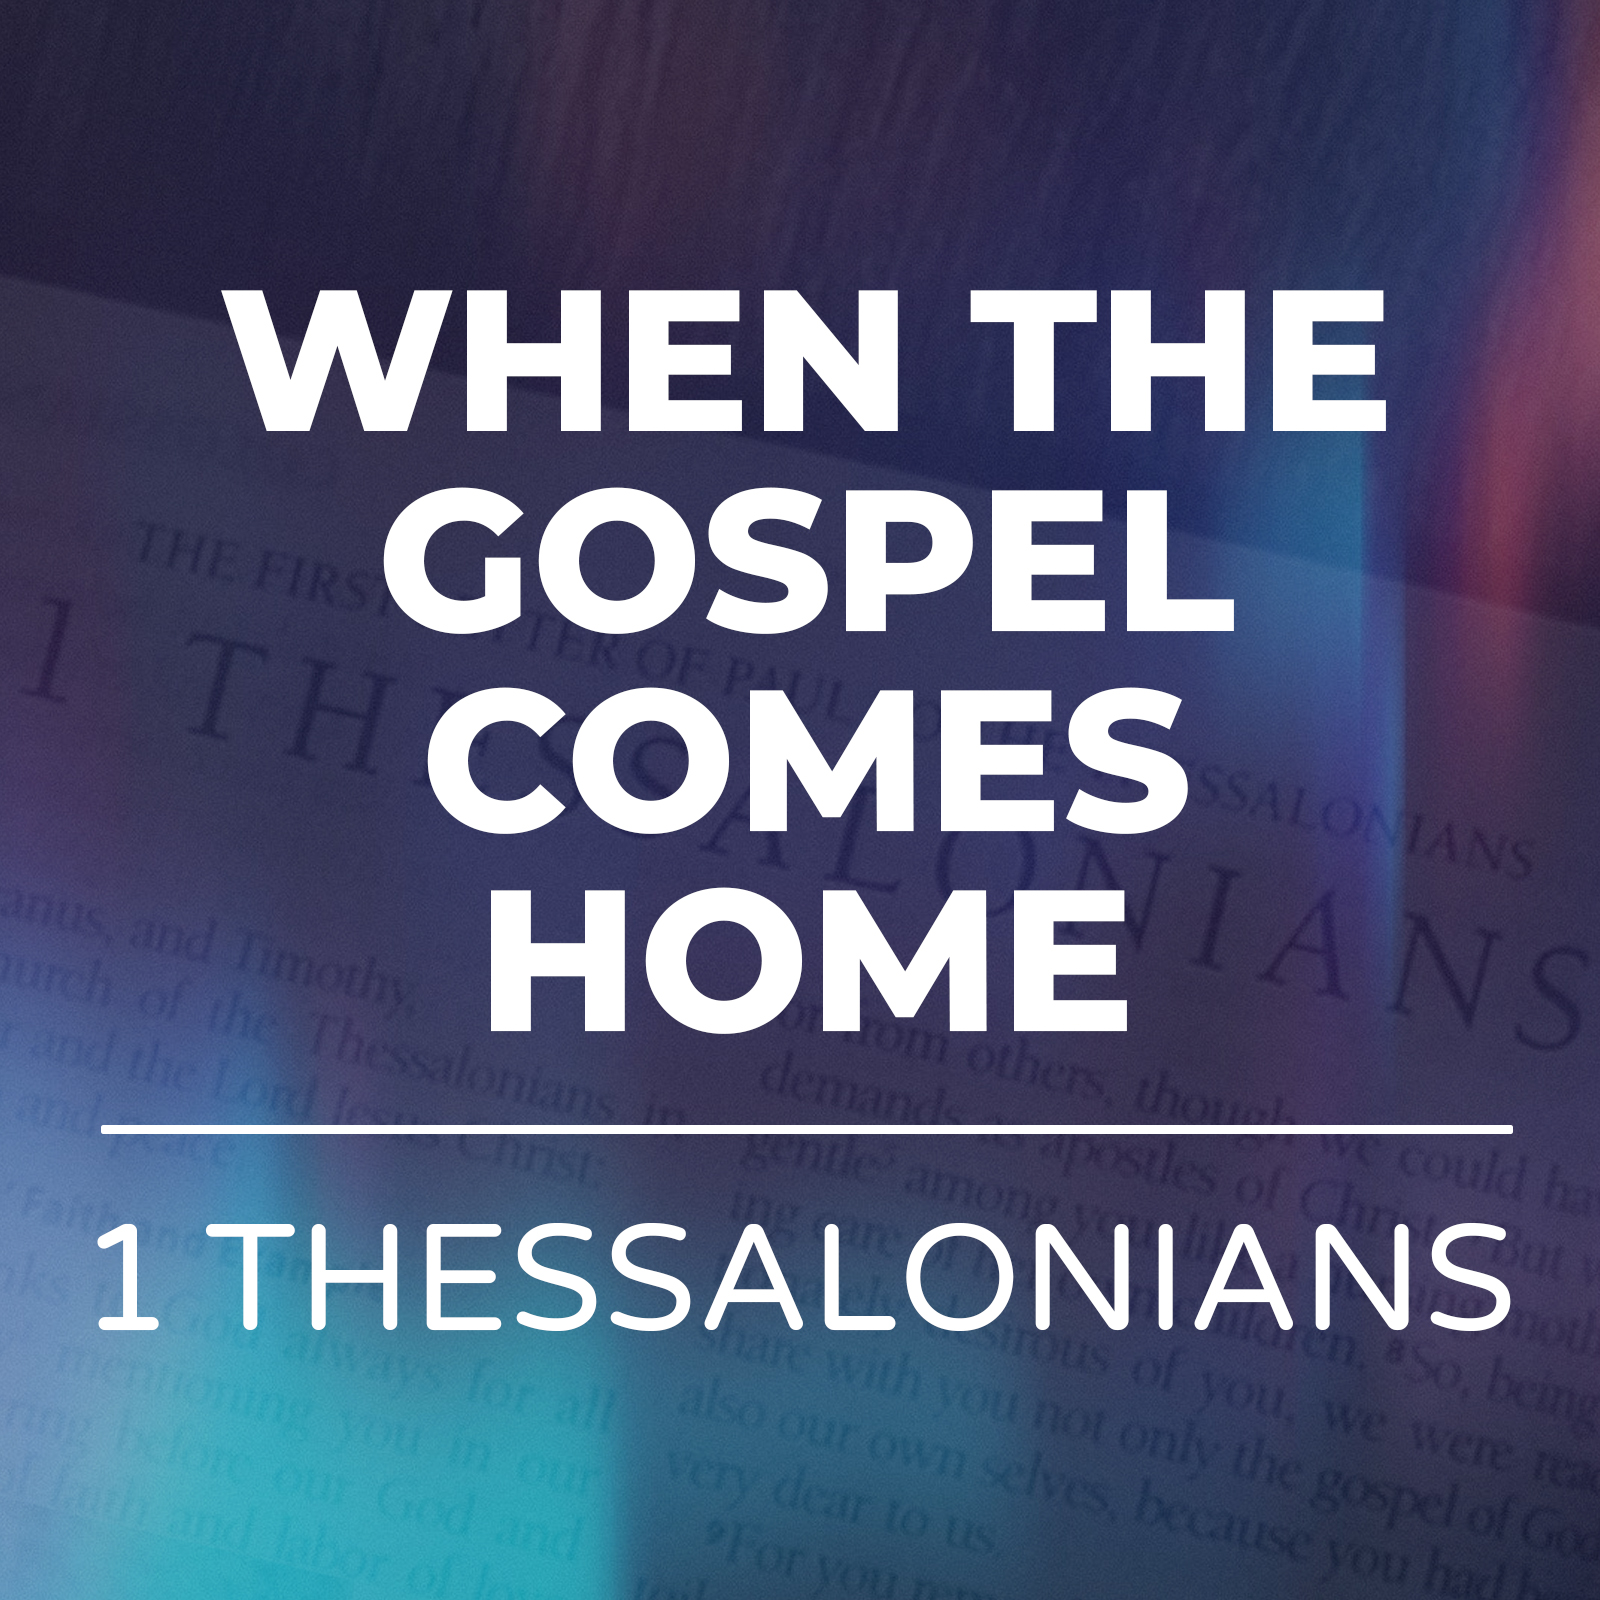 When the gospel comes home - 1 thessalonians Sermon Series - Hope Church Huddersfield